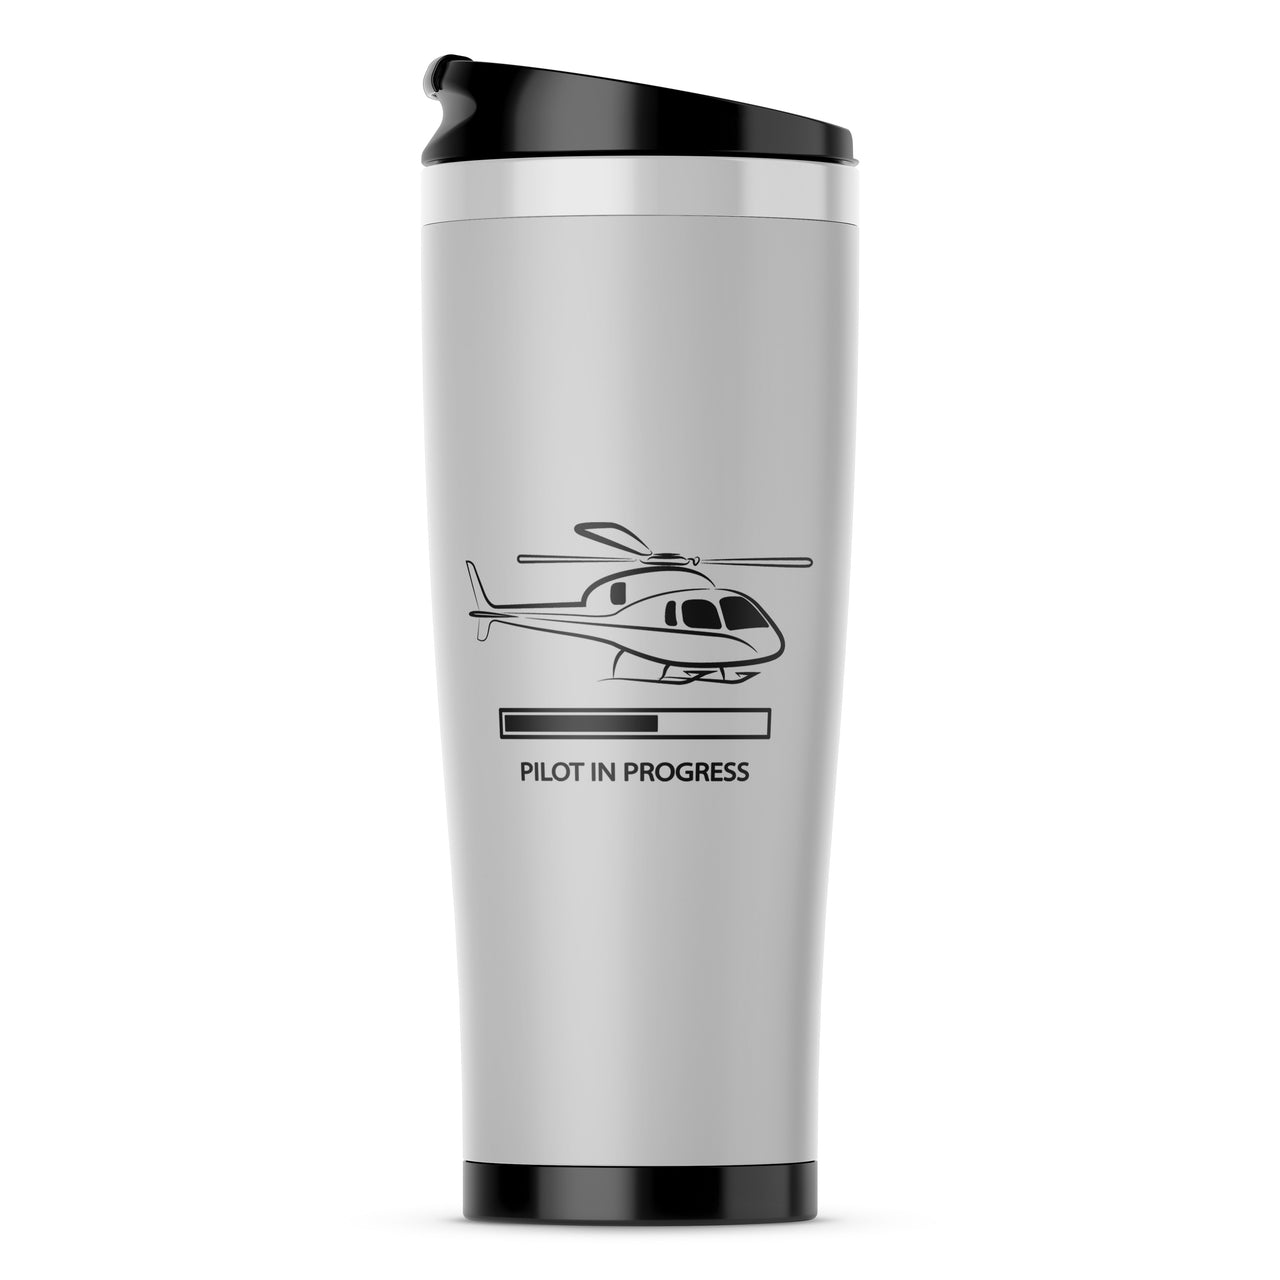 Pilot In Progress (Helicopter) Designed Travel Mugs